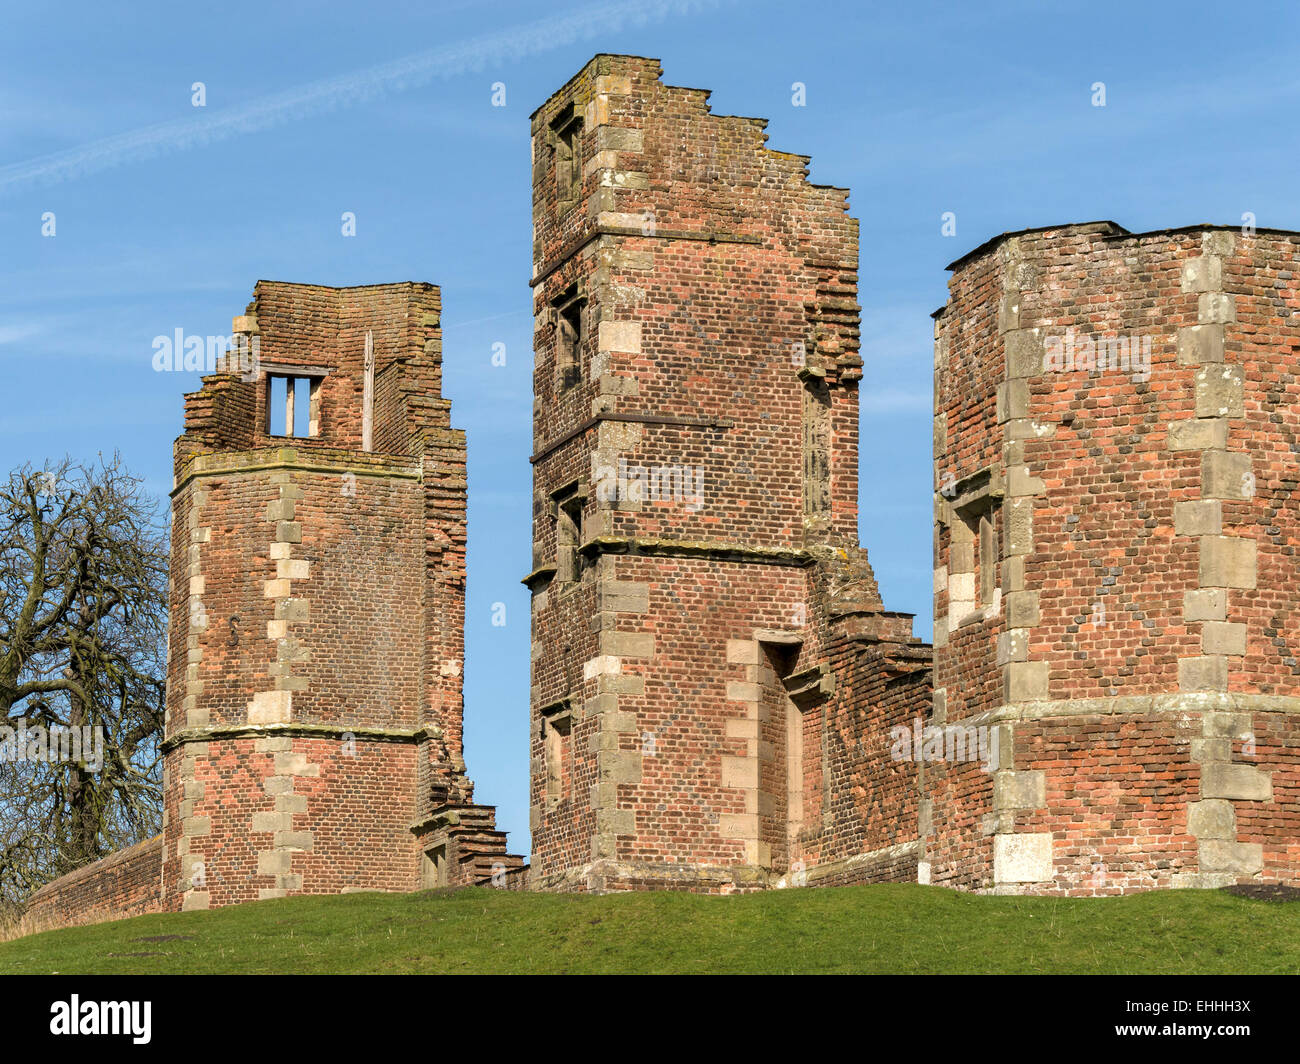 Ruins of Lady Jane Grey's House, Bradgate Park, Charnwood, Leicestershire, England, UK. Stock Photo